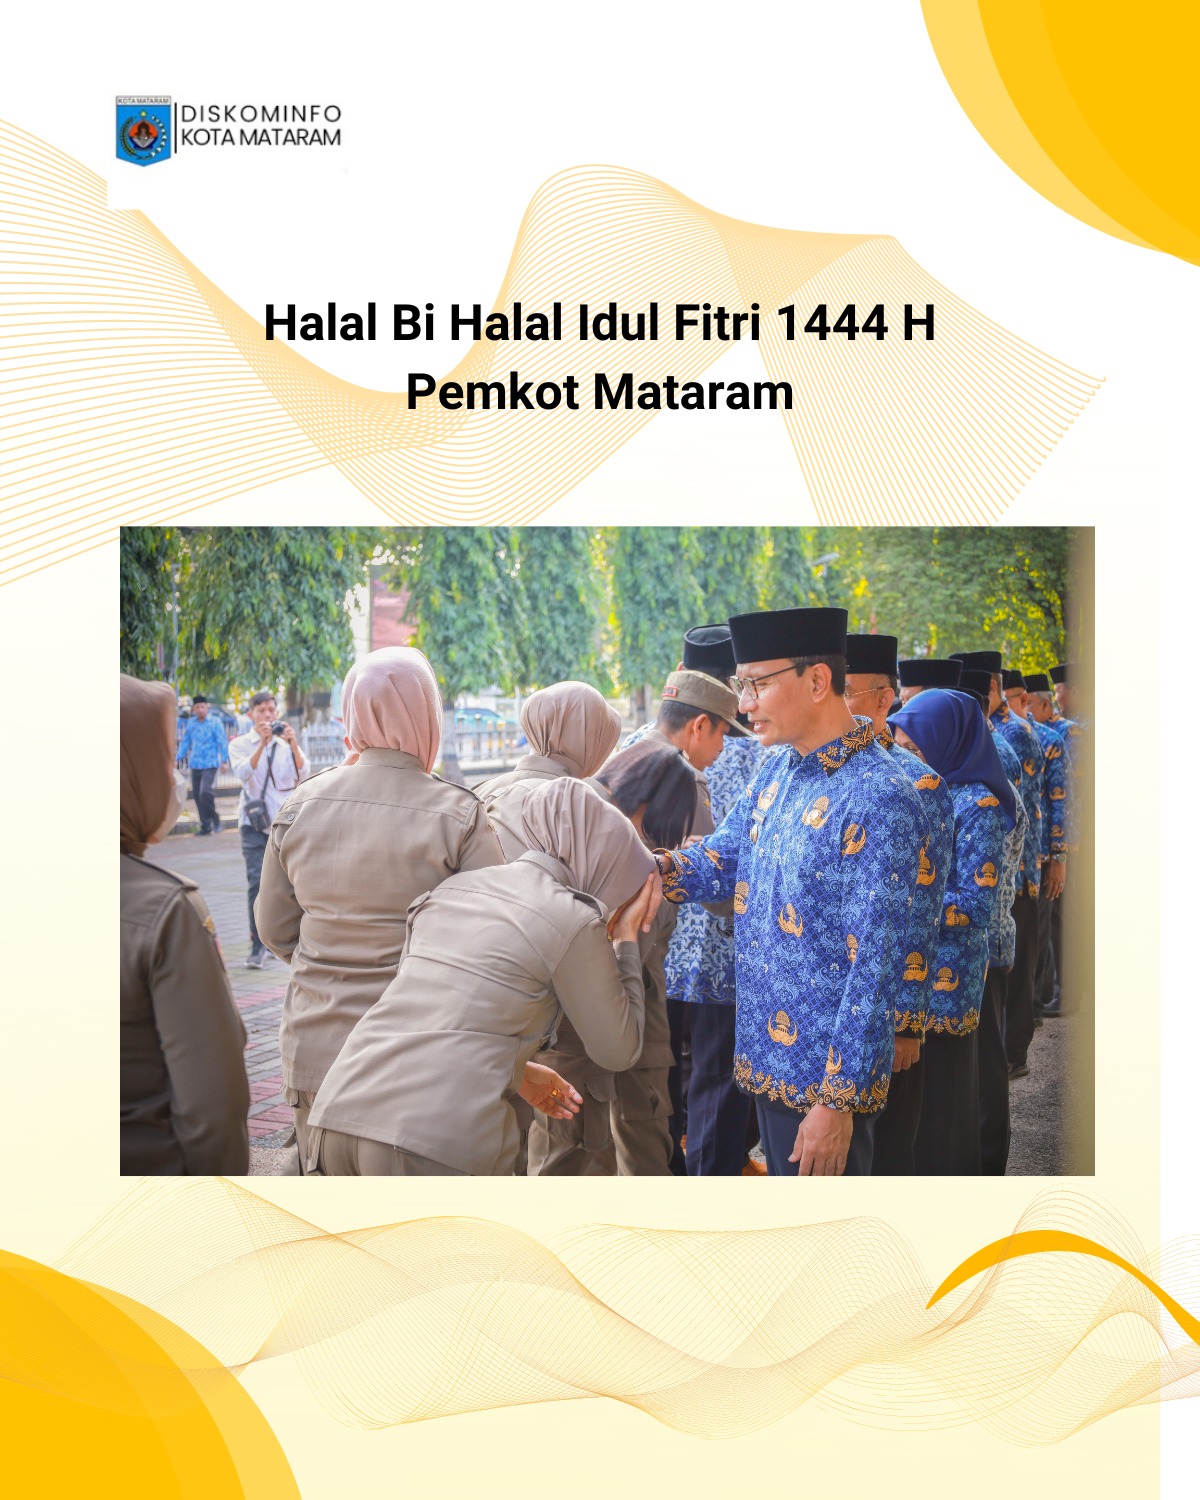 Halal Bi Halal Idul Fitri 1444 H Pemkot Mataram